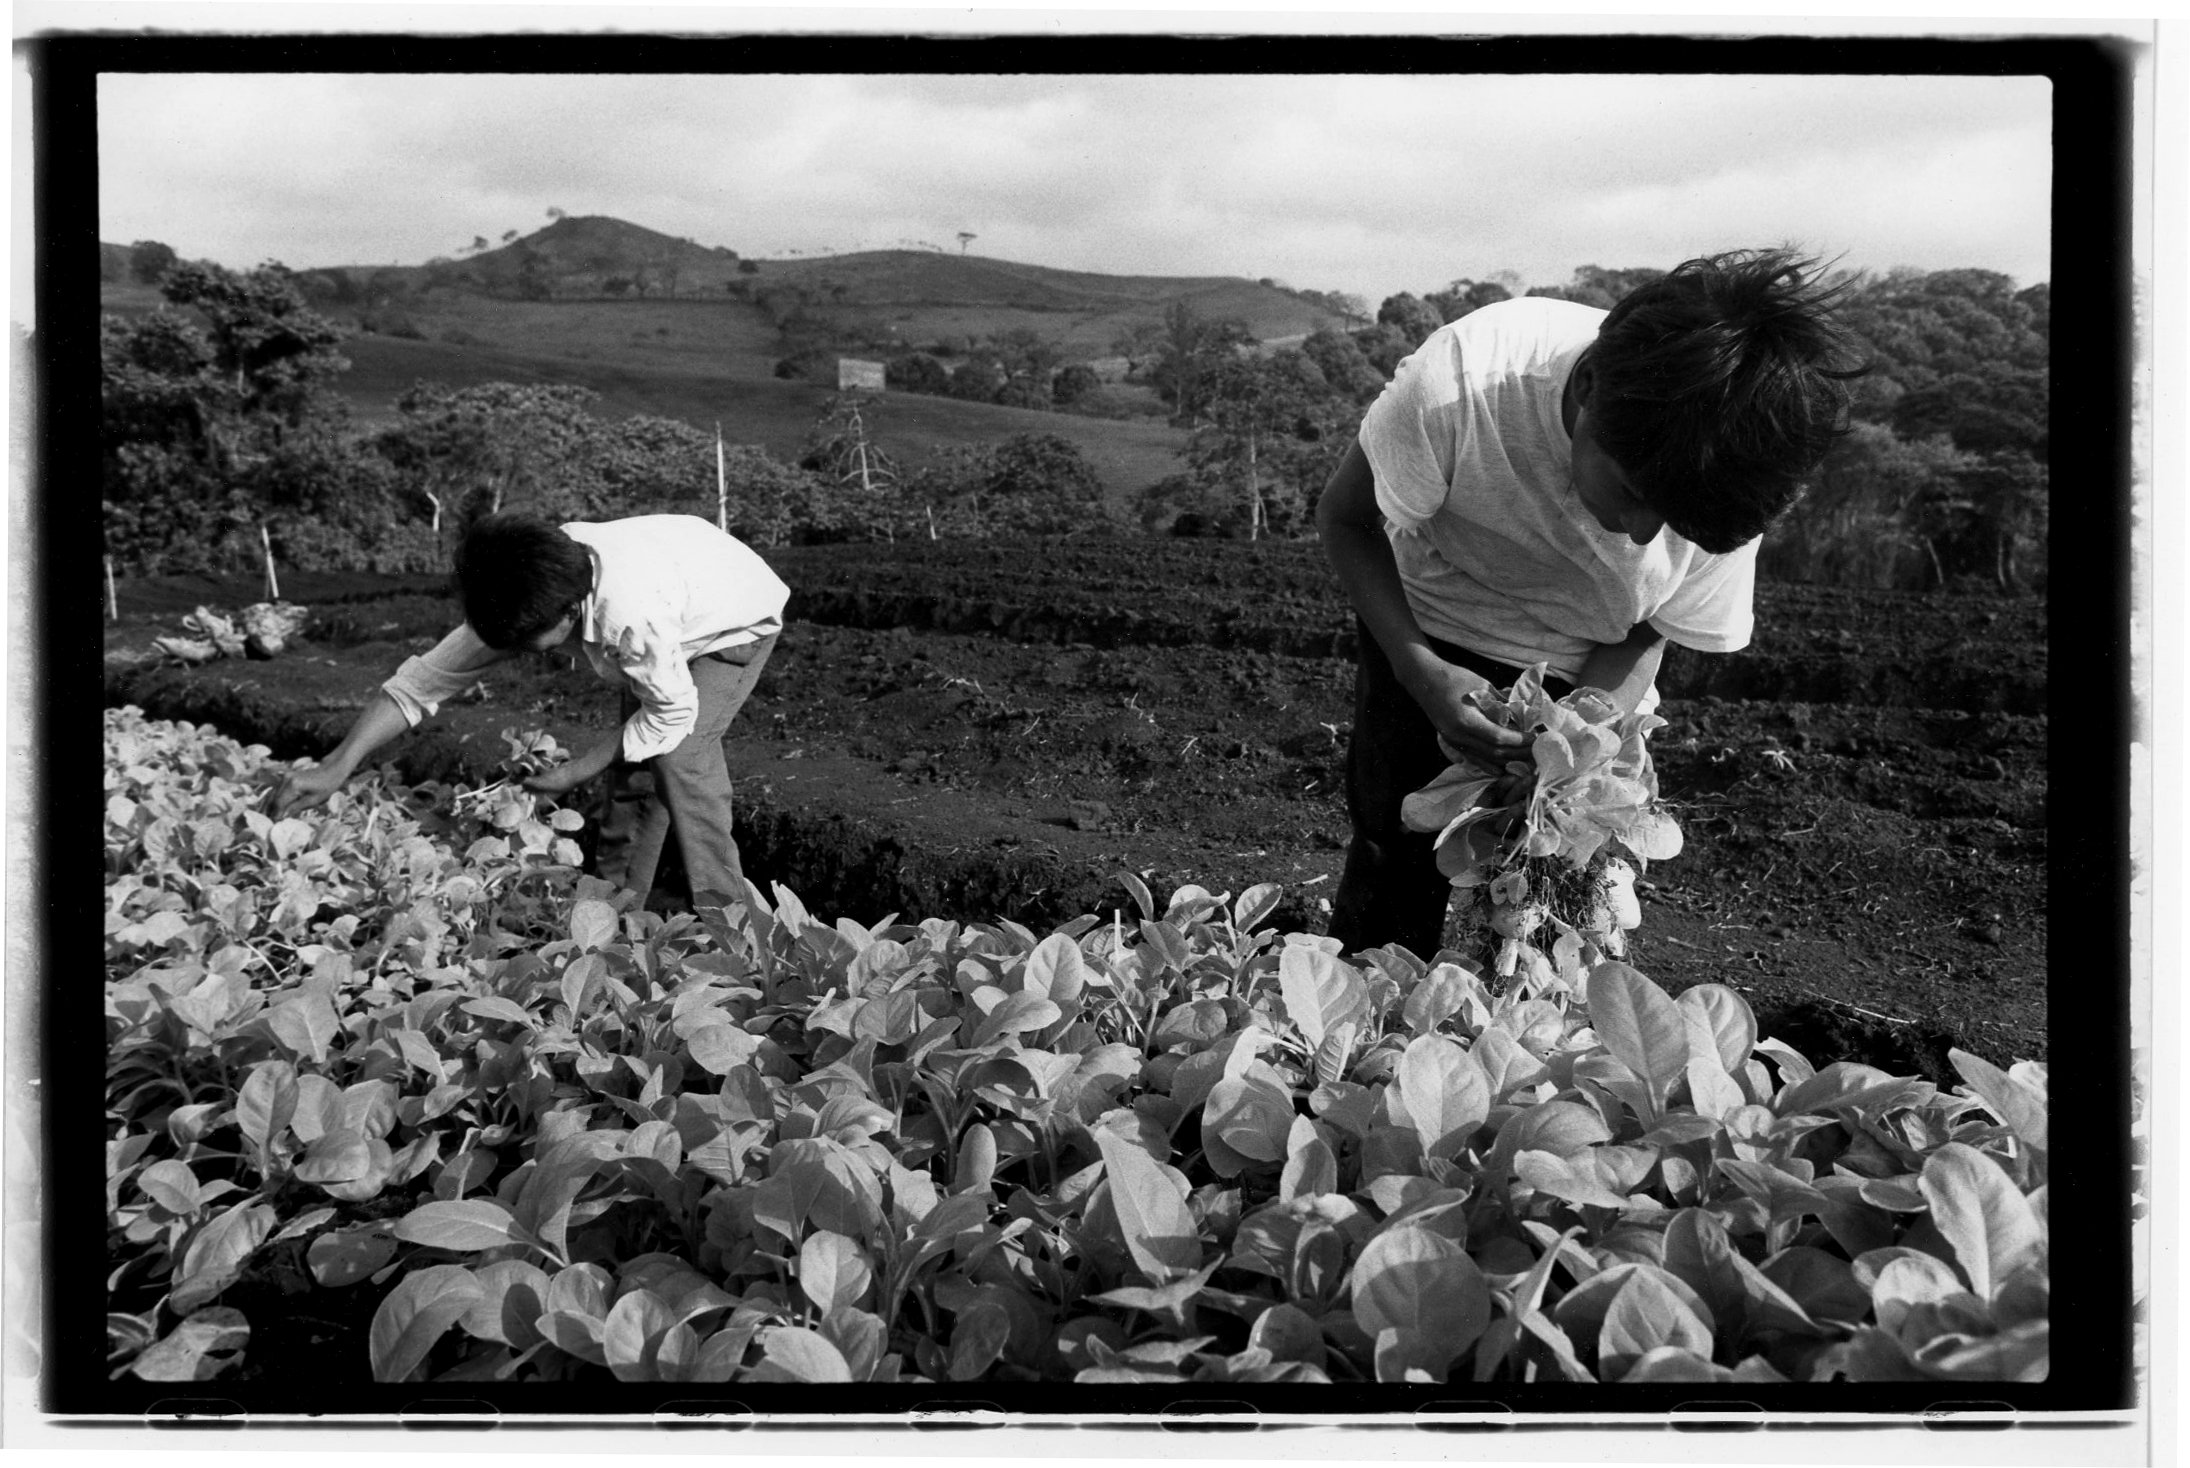  Te-Amo Cigars tobacco transplanting seedlings, San Andres Valley,  Mexico 1997 